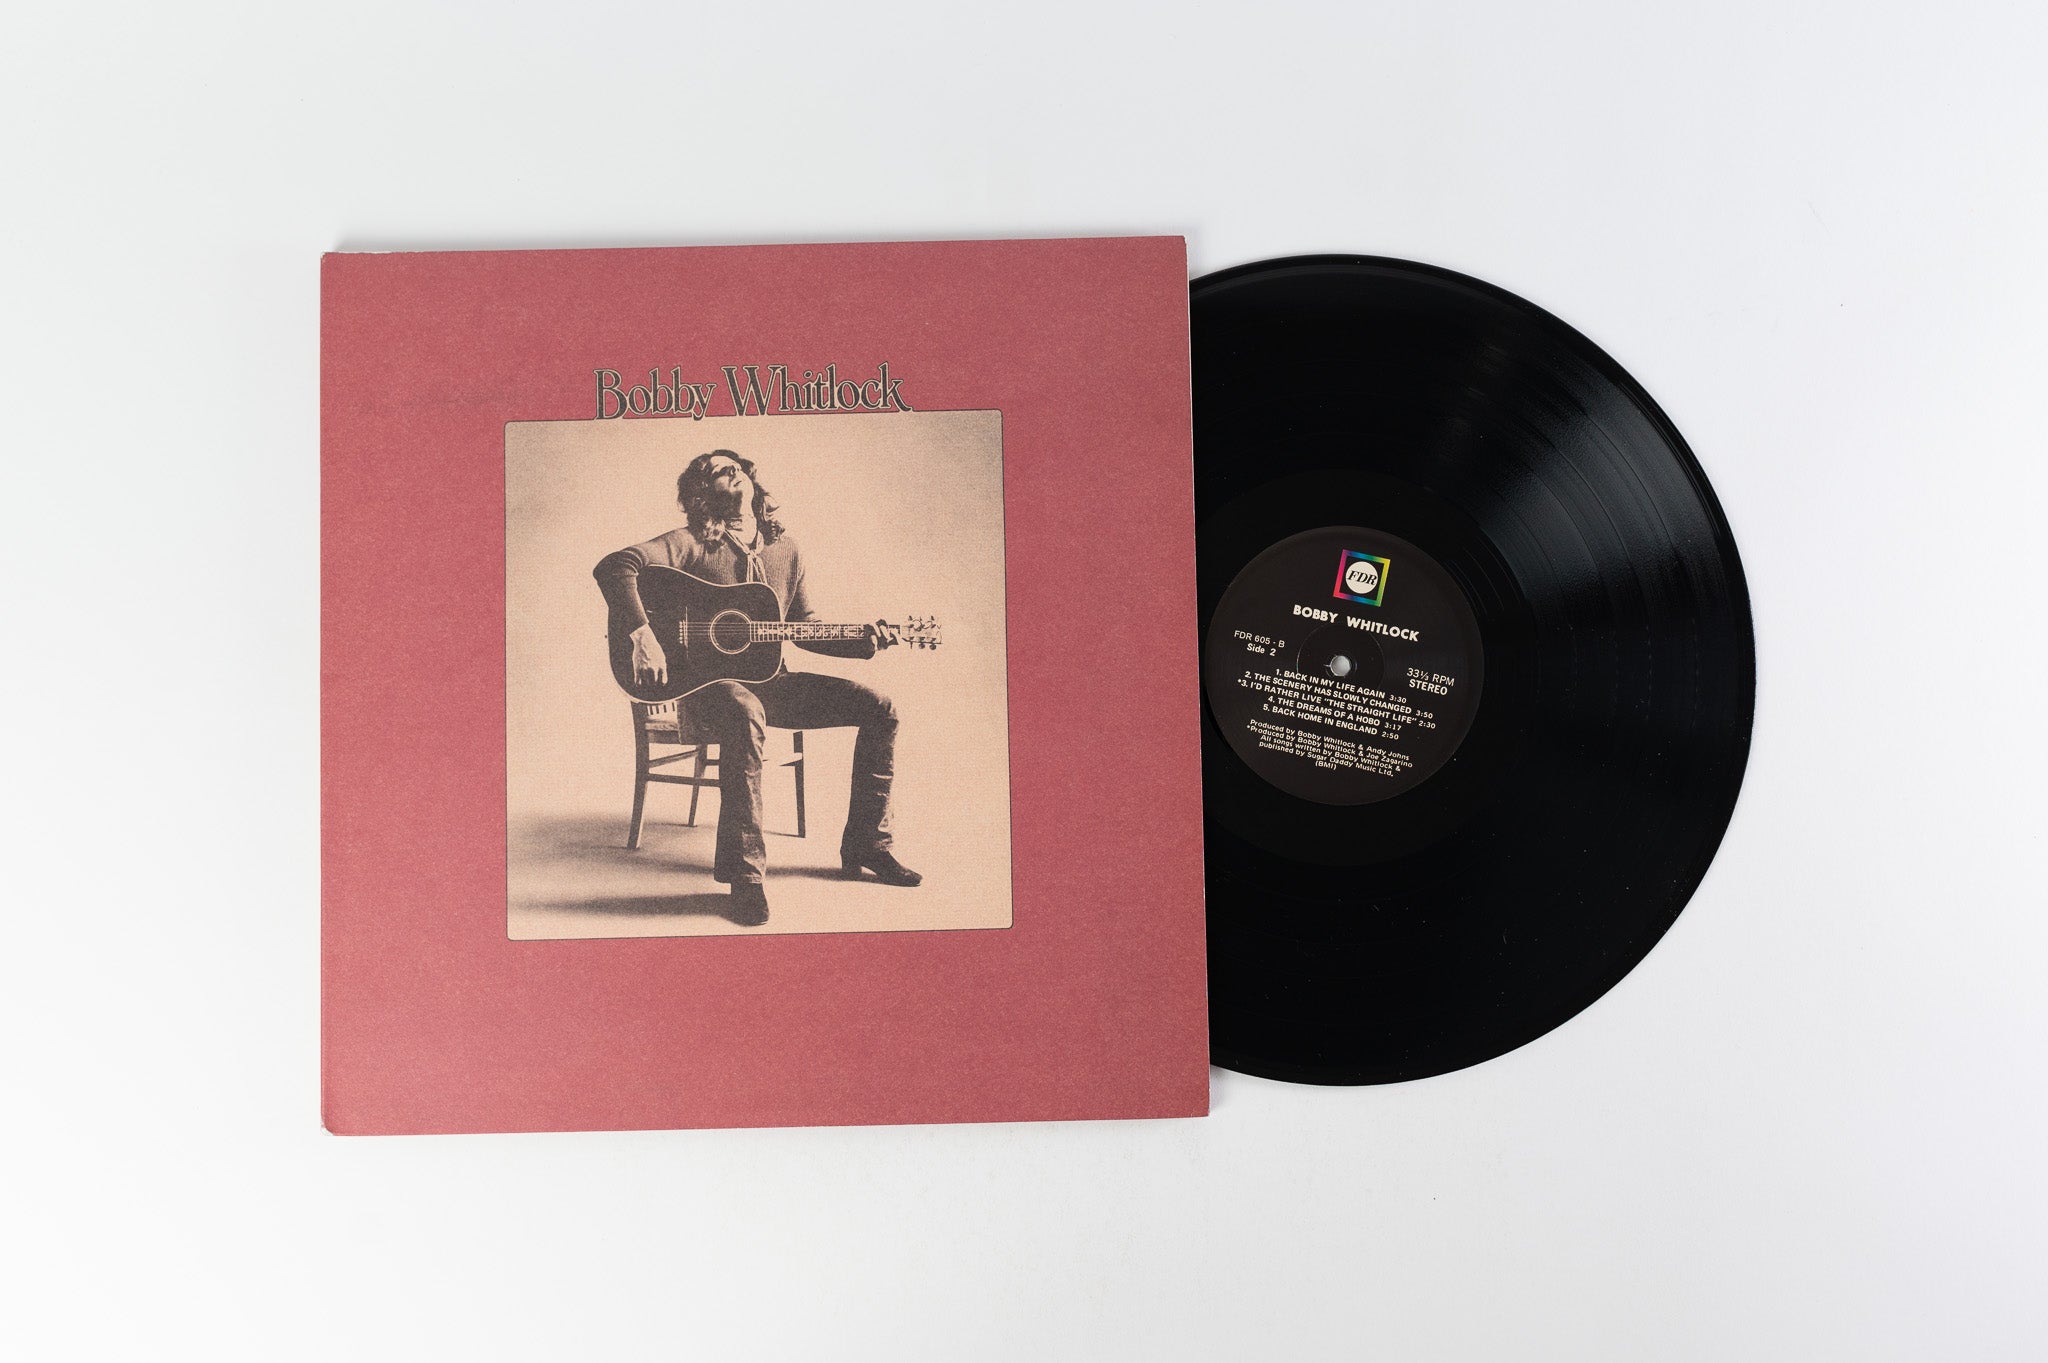 Bobby Whitlock - Bobby Whitlock Reissue on Future Days Recordings